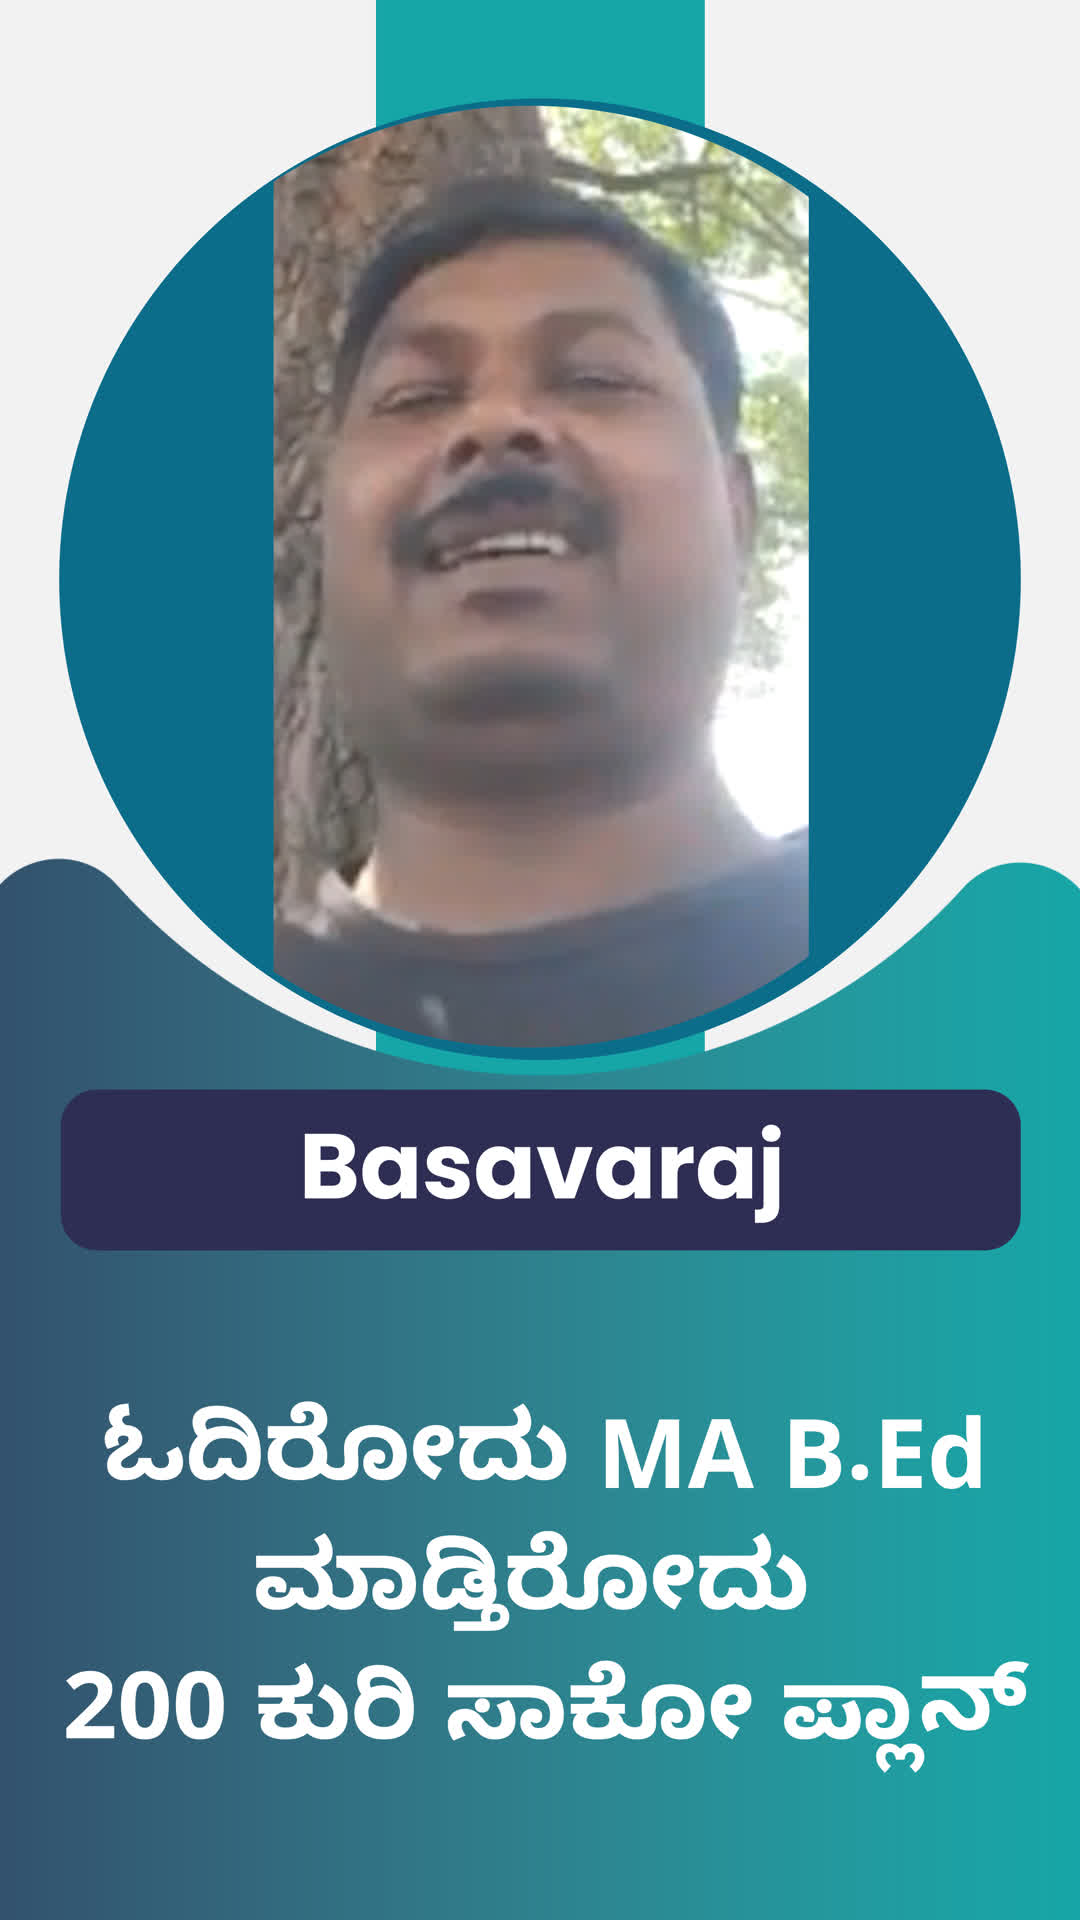 Basavaraj Hosur's Honest Review of ffreedom app - Bagalkot ,Karnataka